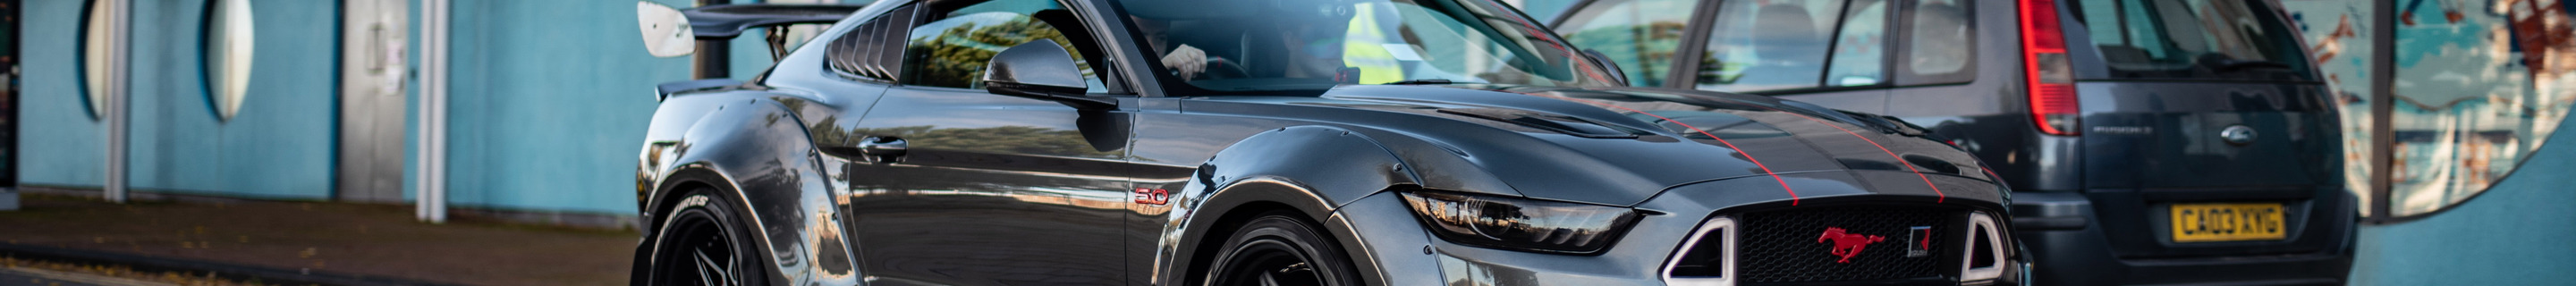 Ford Mustang GT 2015 GRID Widebody